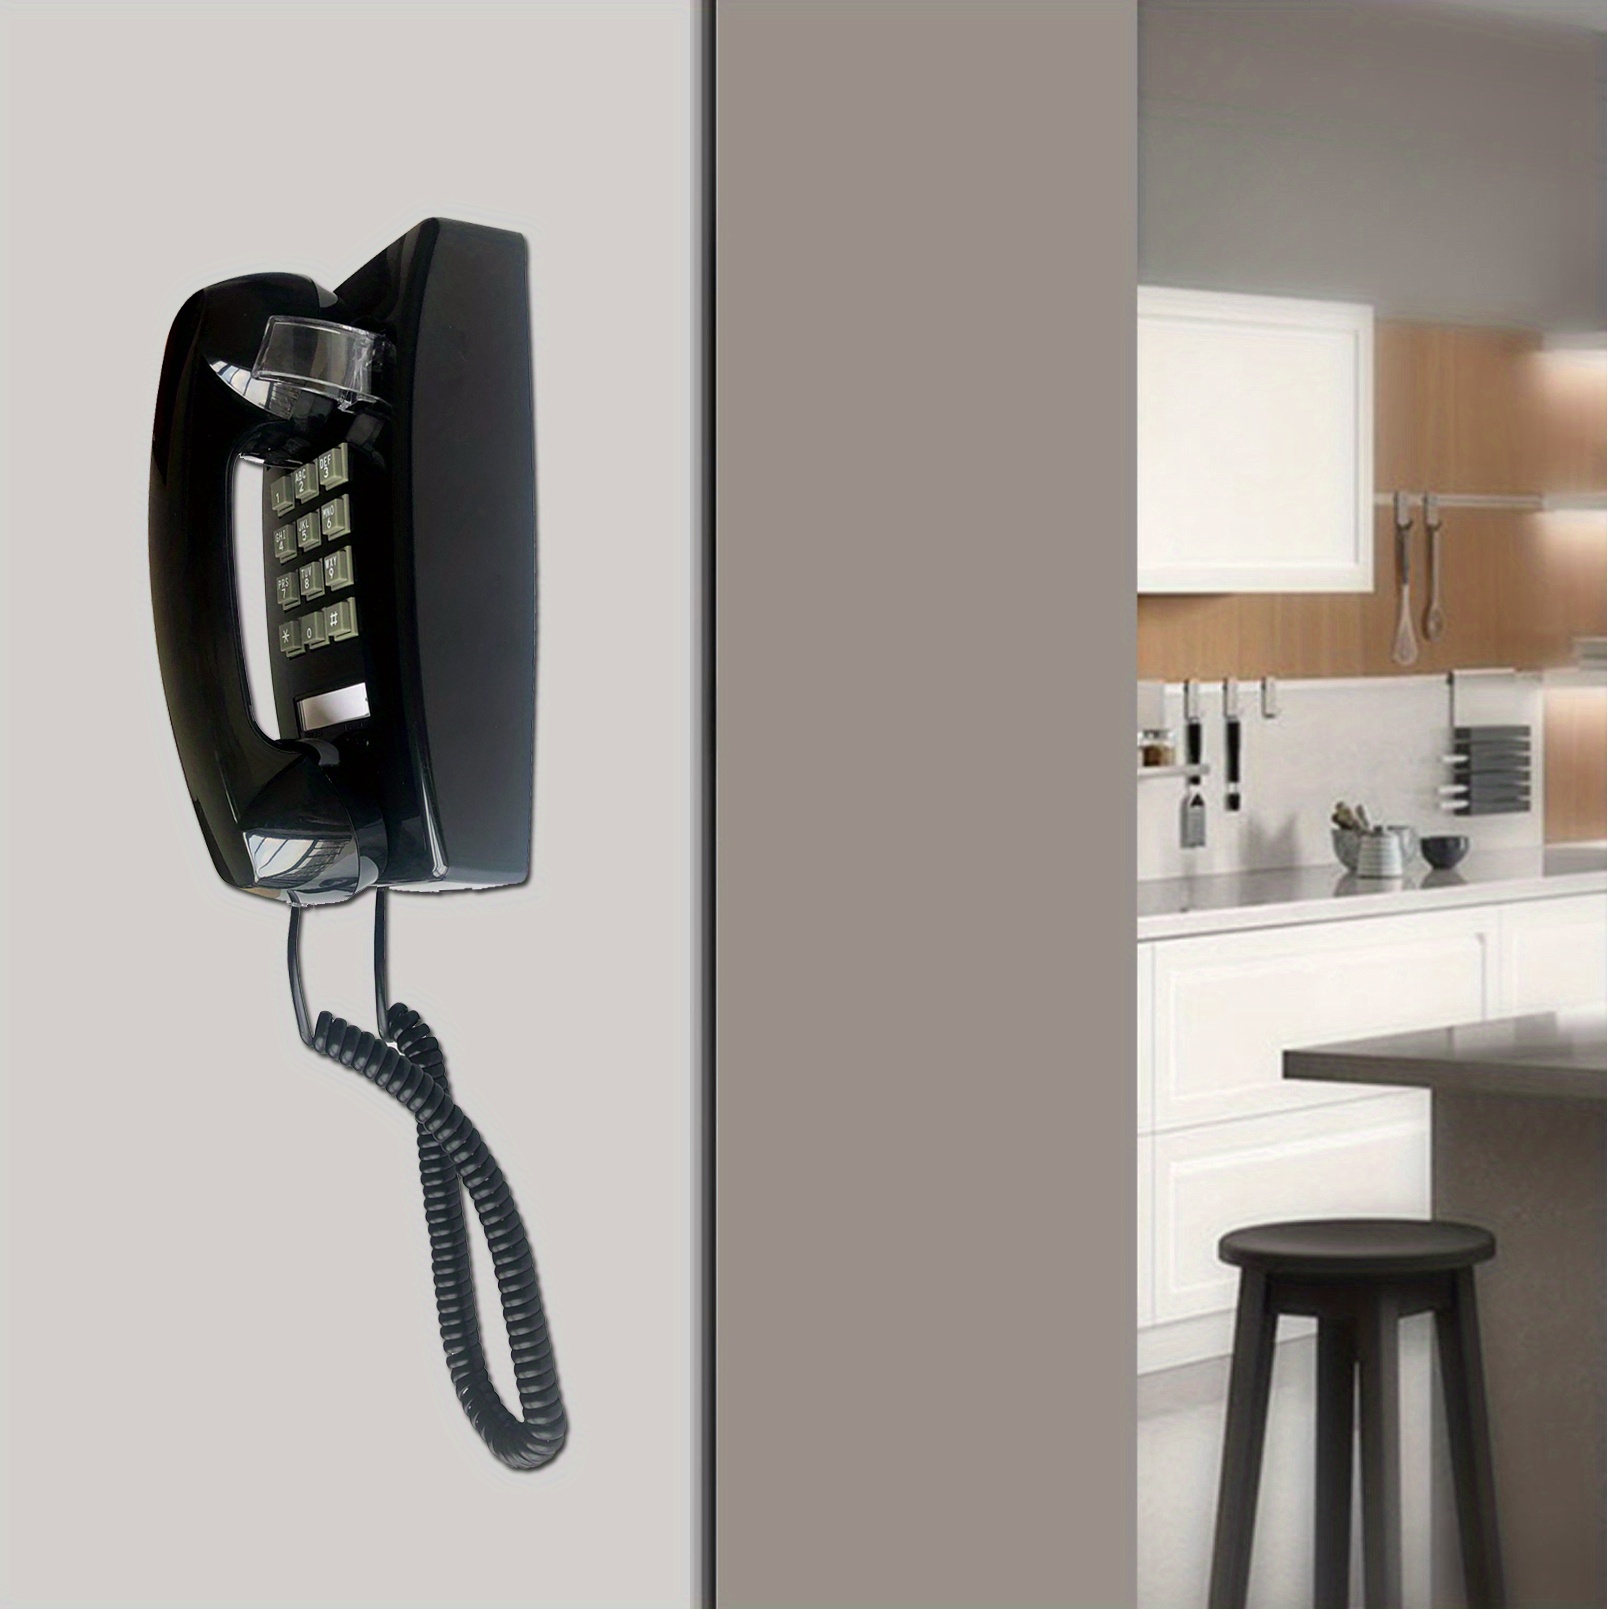 Teléfonos fijos de escritorio, teléfono con cable de montaje en pared,  teléfono de pared retro clásico con teléfono y función de silencio para  cocina